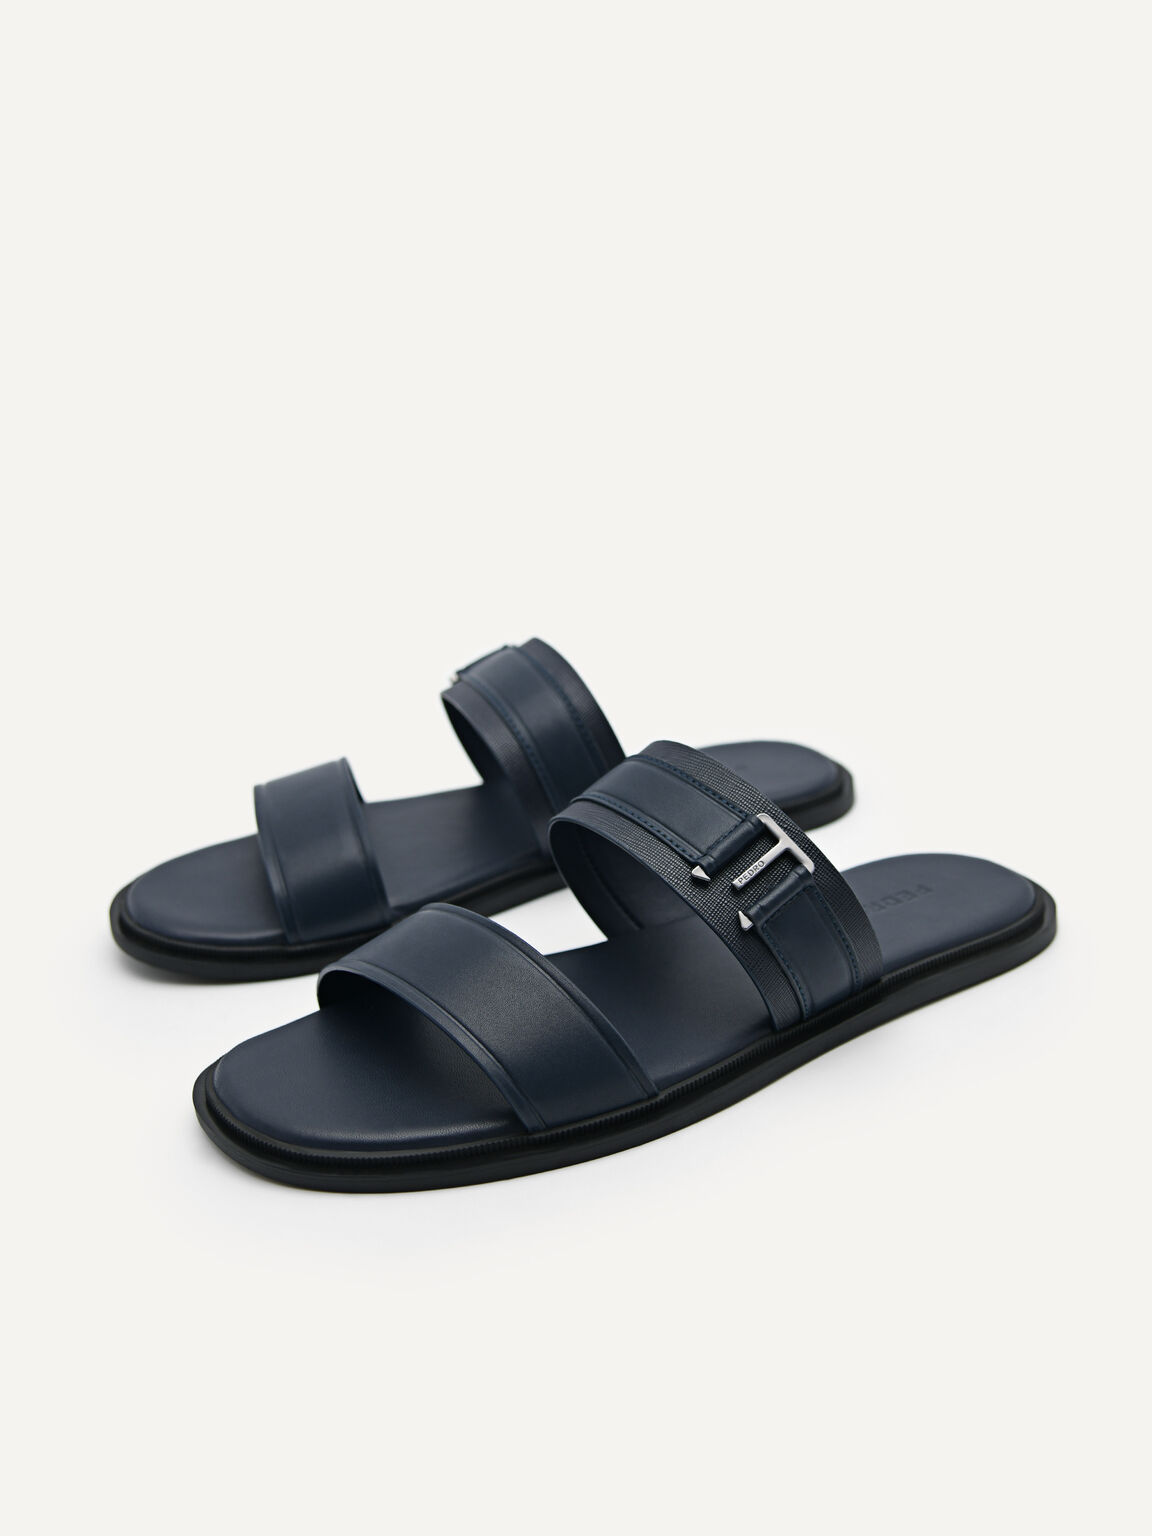 bleu de chauffe - IWATE sandals & ARLO backpack 😘😘😘 Sandals